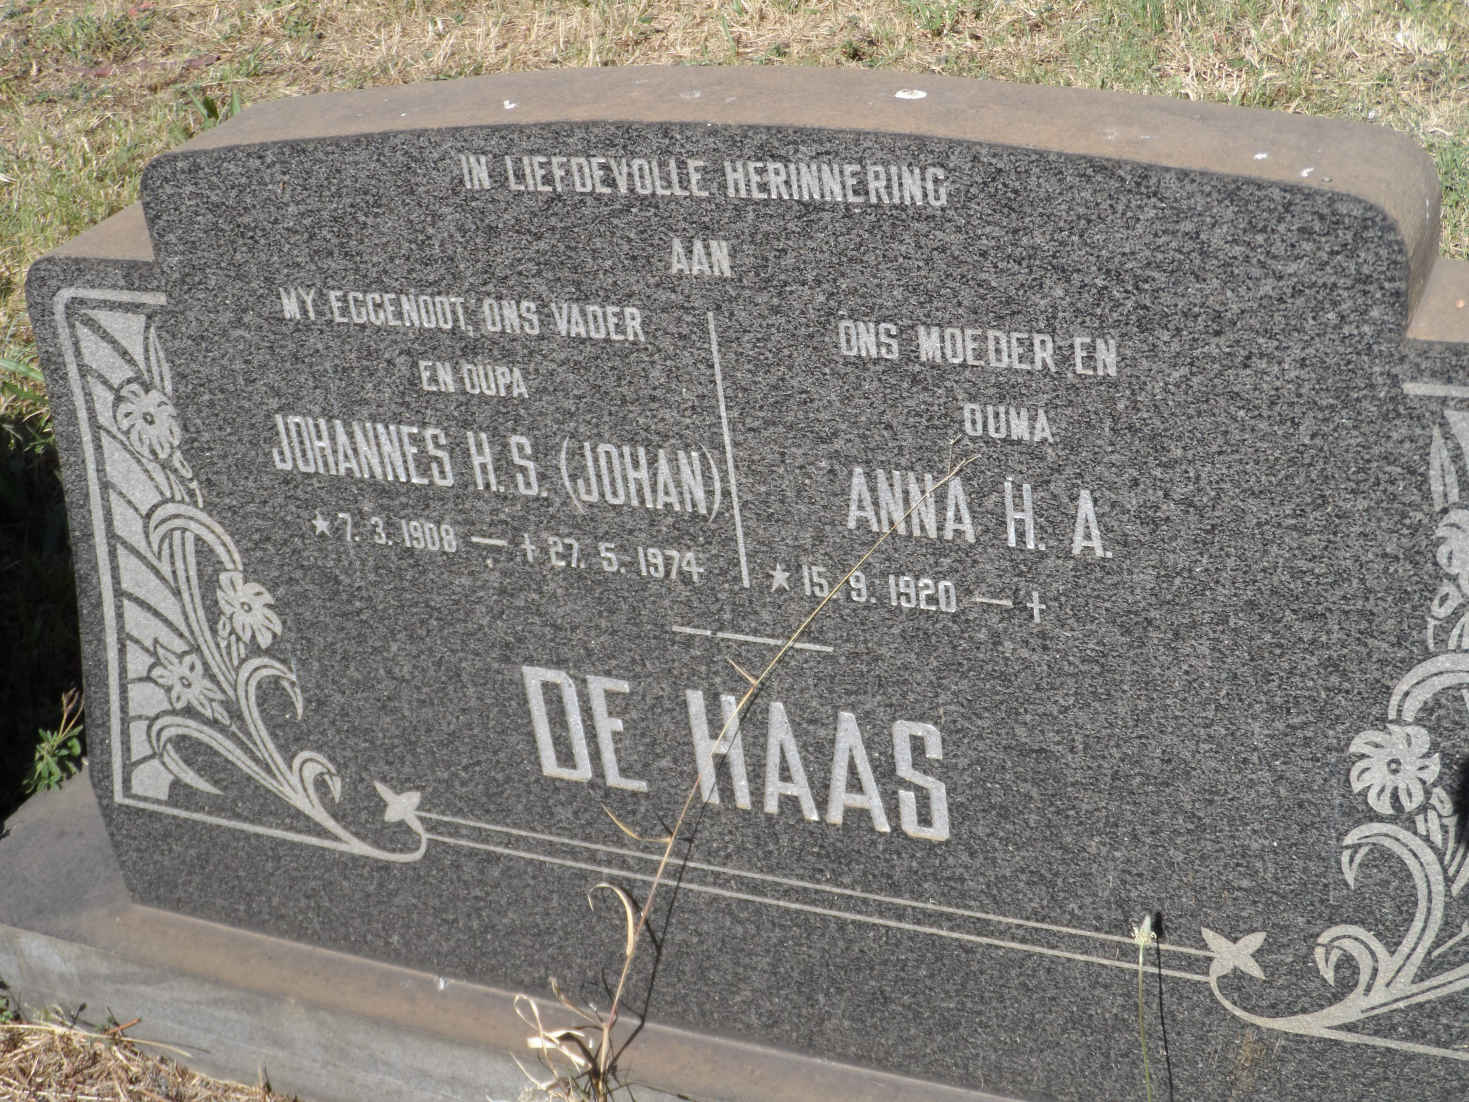 HAAS Johannes H.S., de 1908-1974 & Anna H.A. 1920-